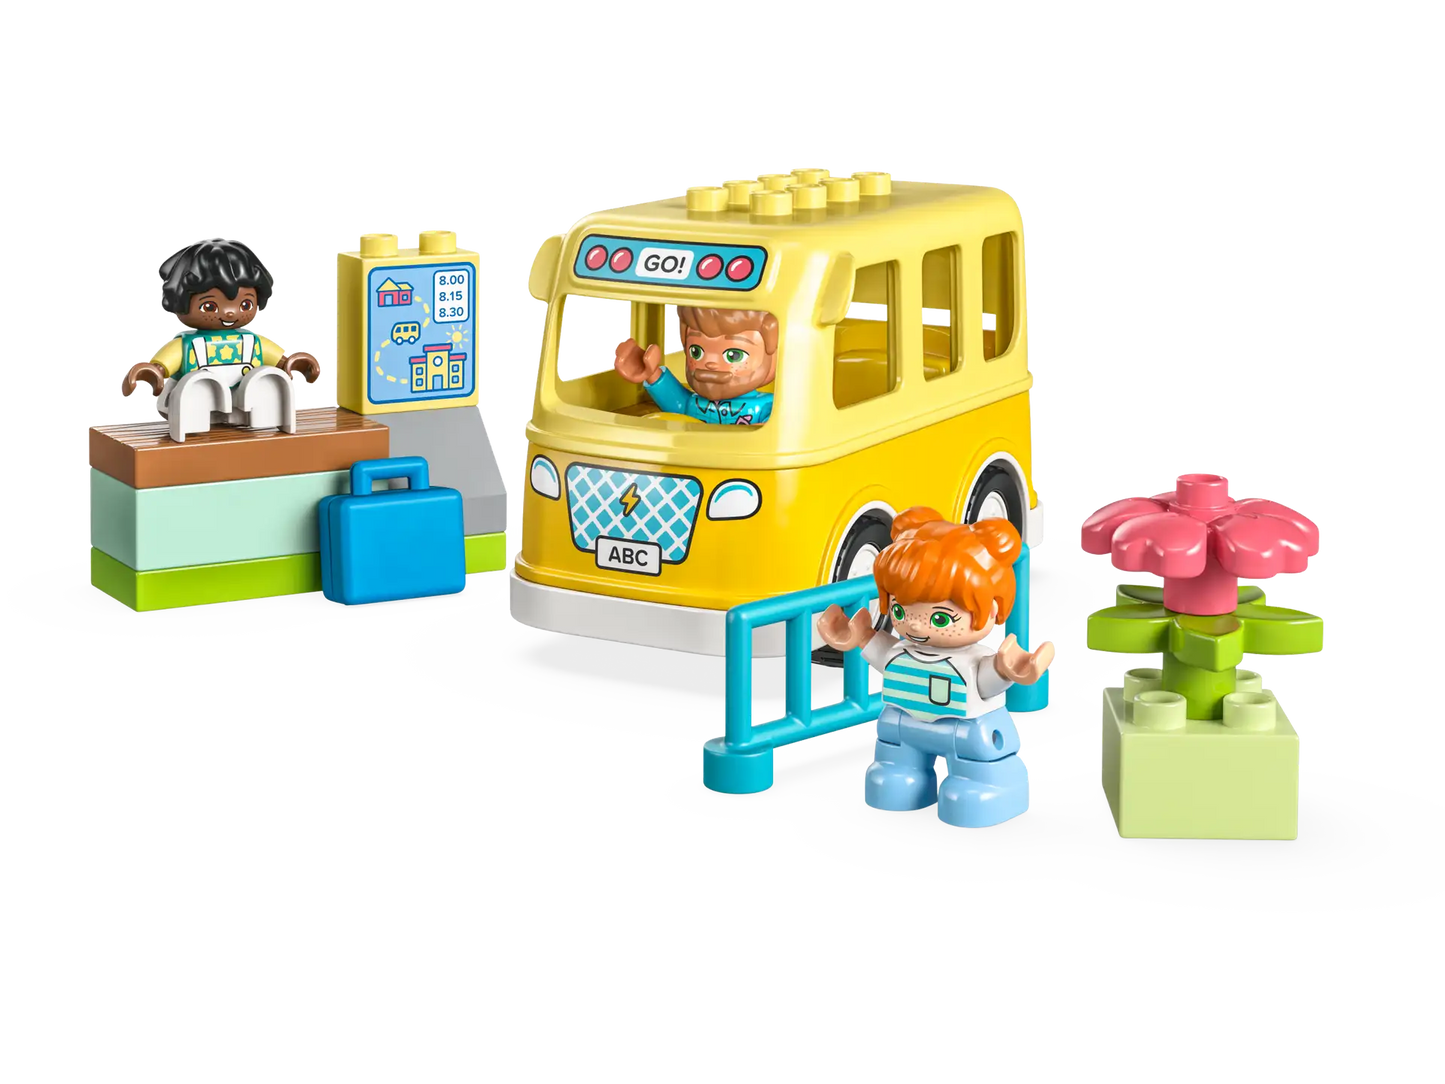 Bus Ride Lego Set